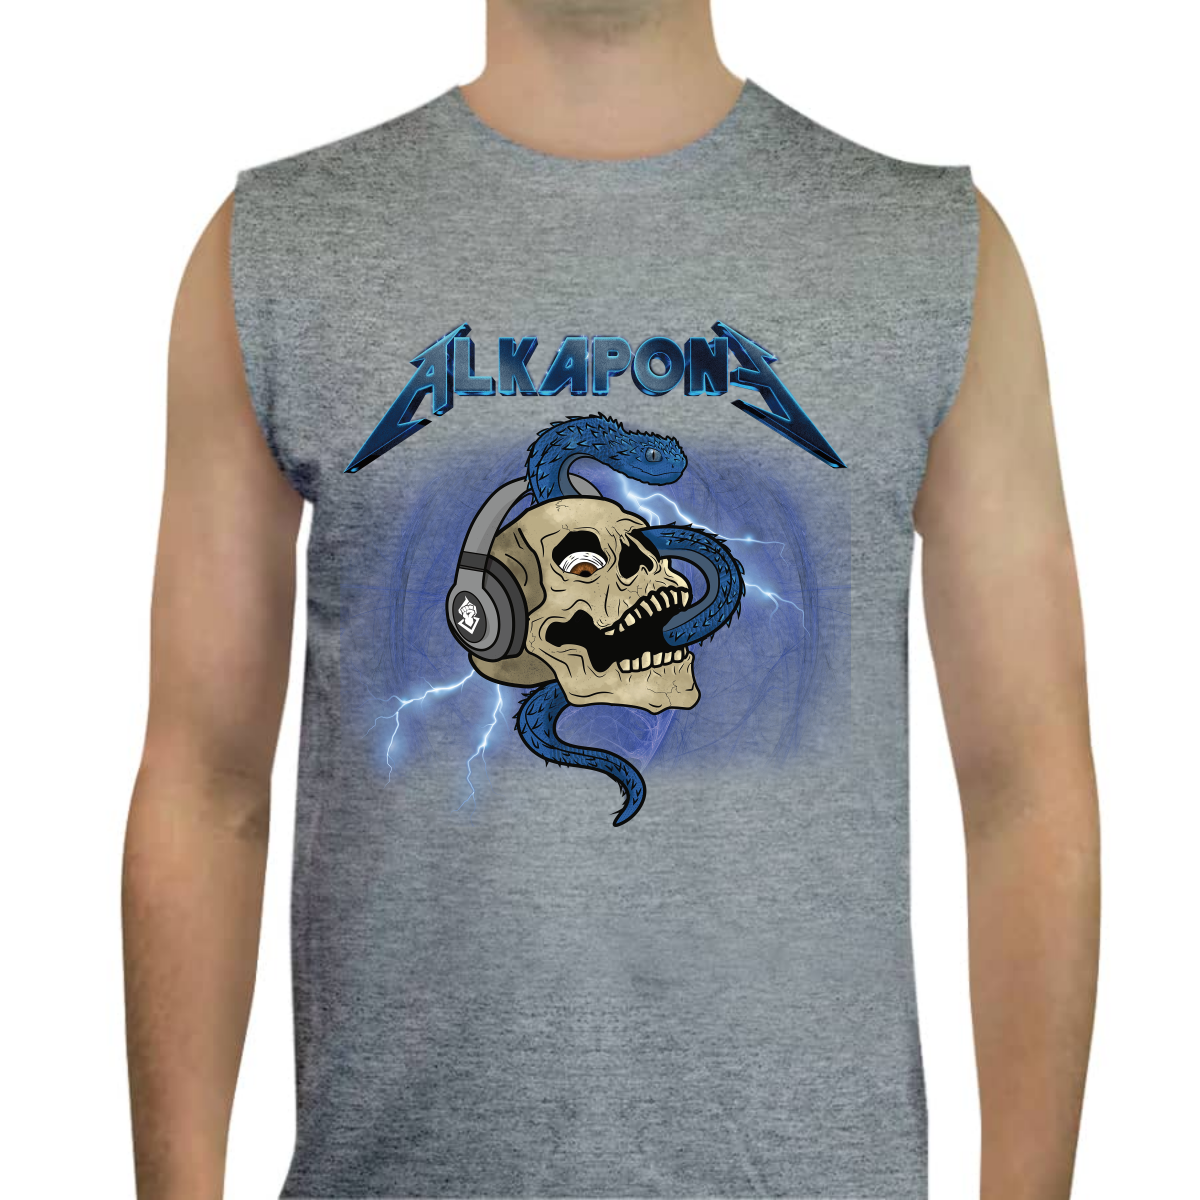 Metallic alkapone tank top t-shirt lightning bolt with skull